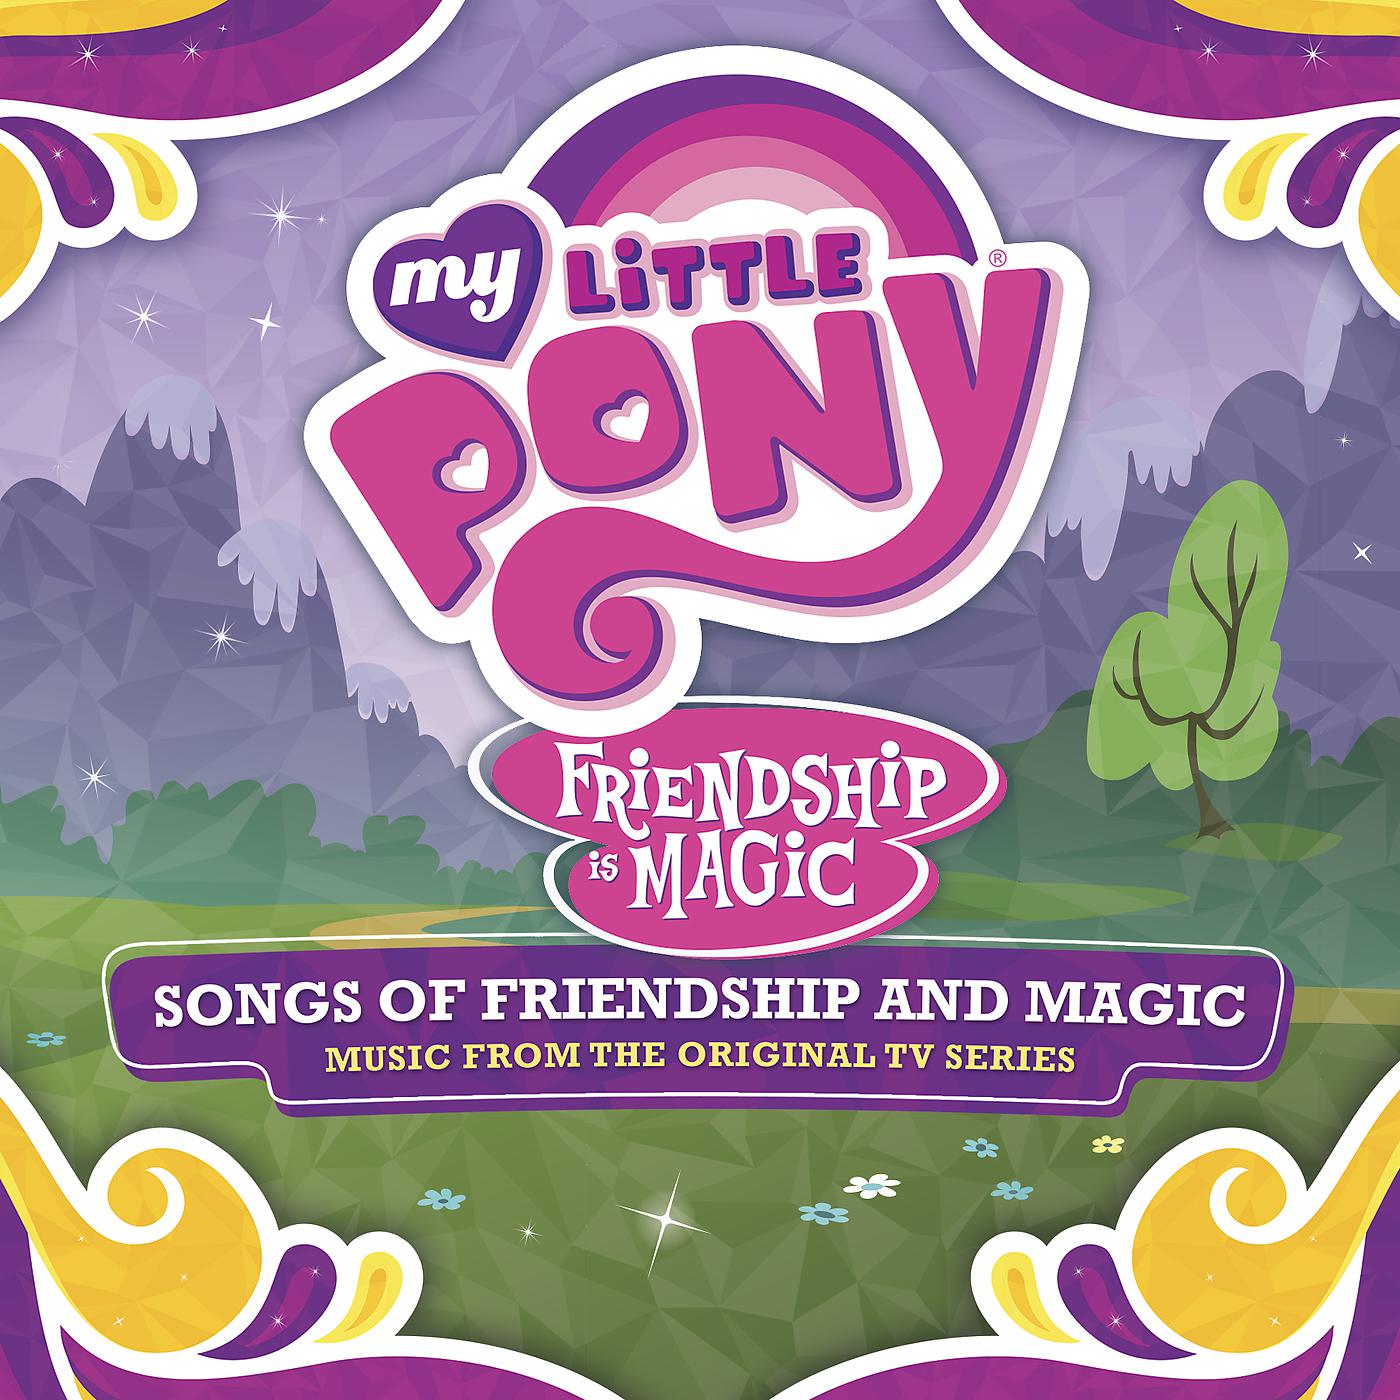 Песня маджик. Френдшип маджик. My little Pony песня. Songs of Friendship and Magic Music. Пони Сонг.